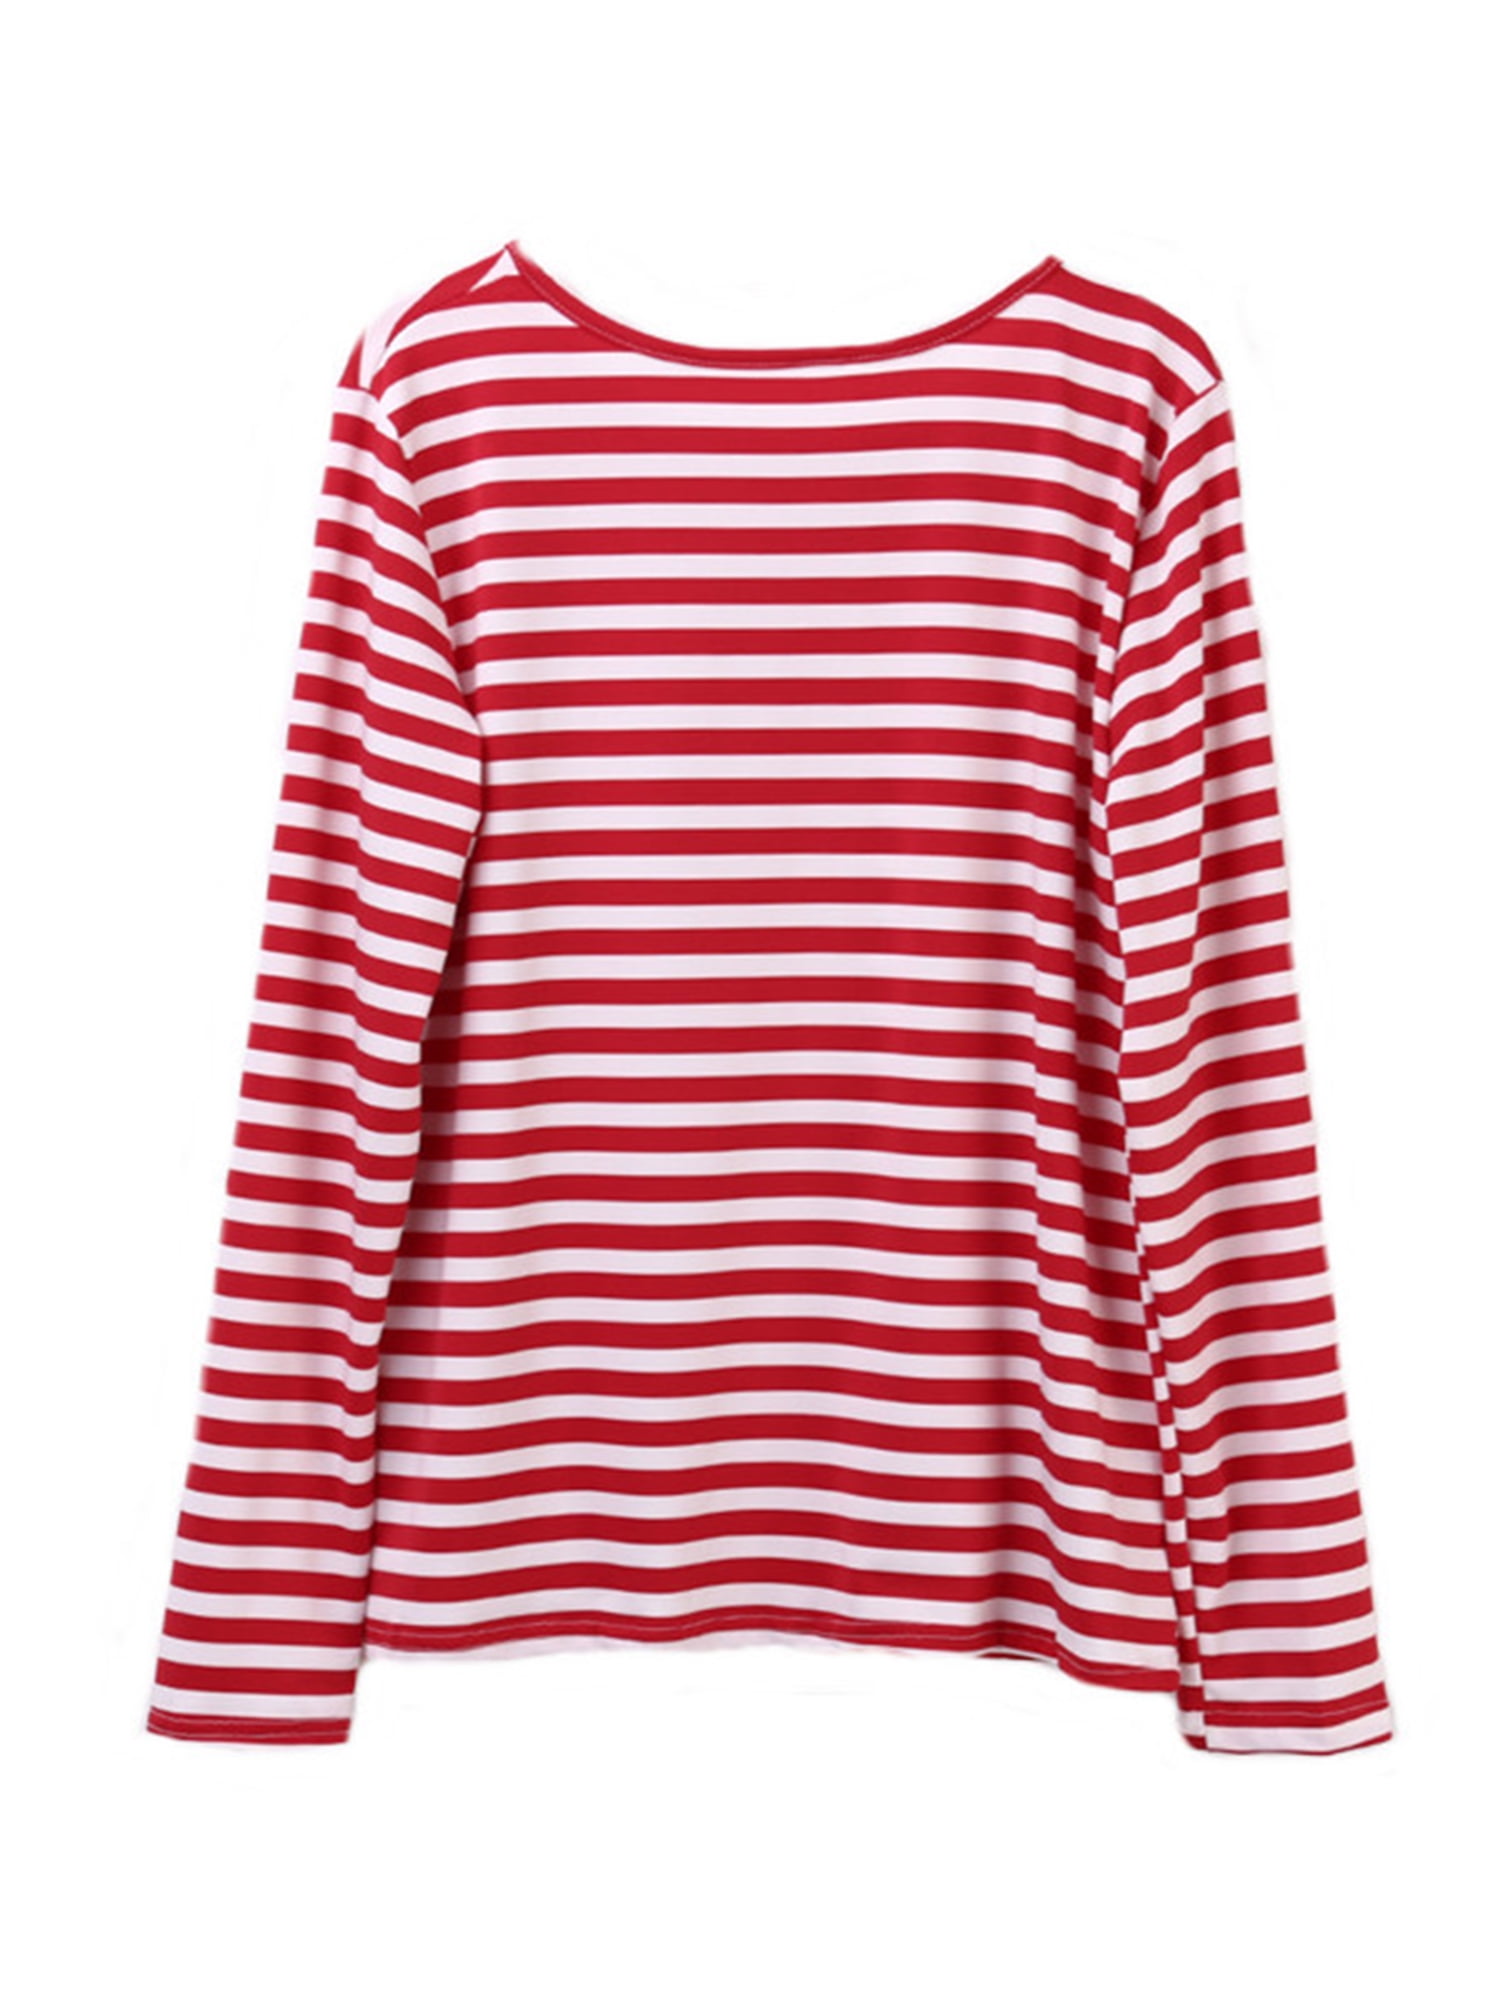 Konsekvent Overskrift Sociale Studier Yejaeka Red White Striped Tshirt Women Long Sleeve Cotton Loose Tee T Shirt  Female Basic O-Neck Tops - Walmart.com